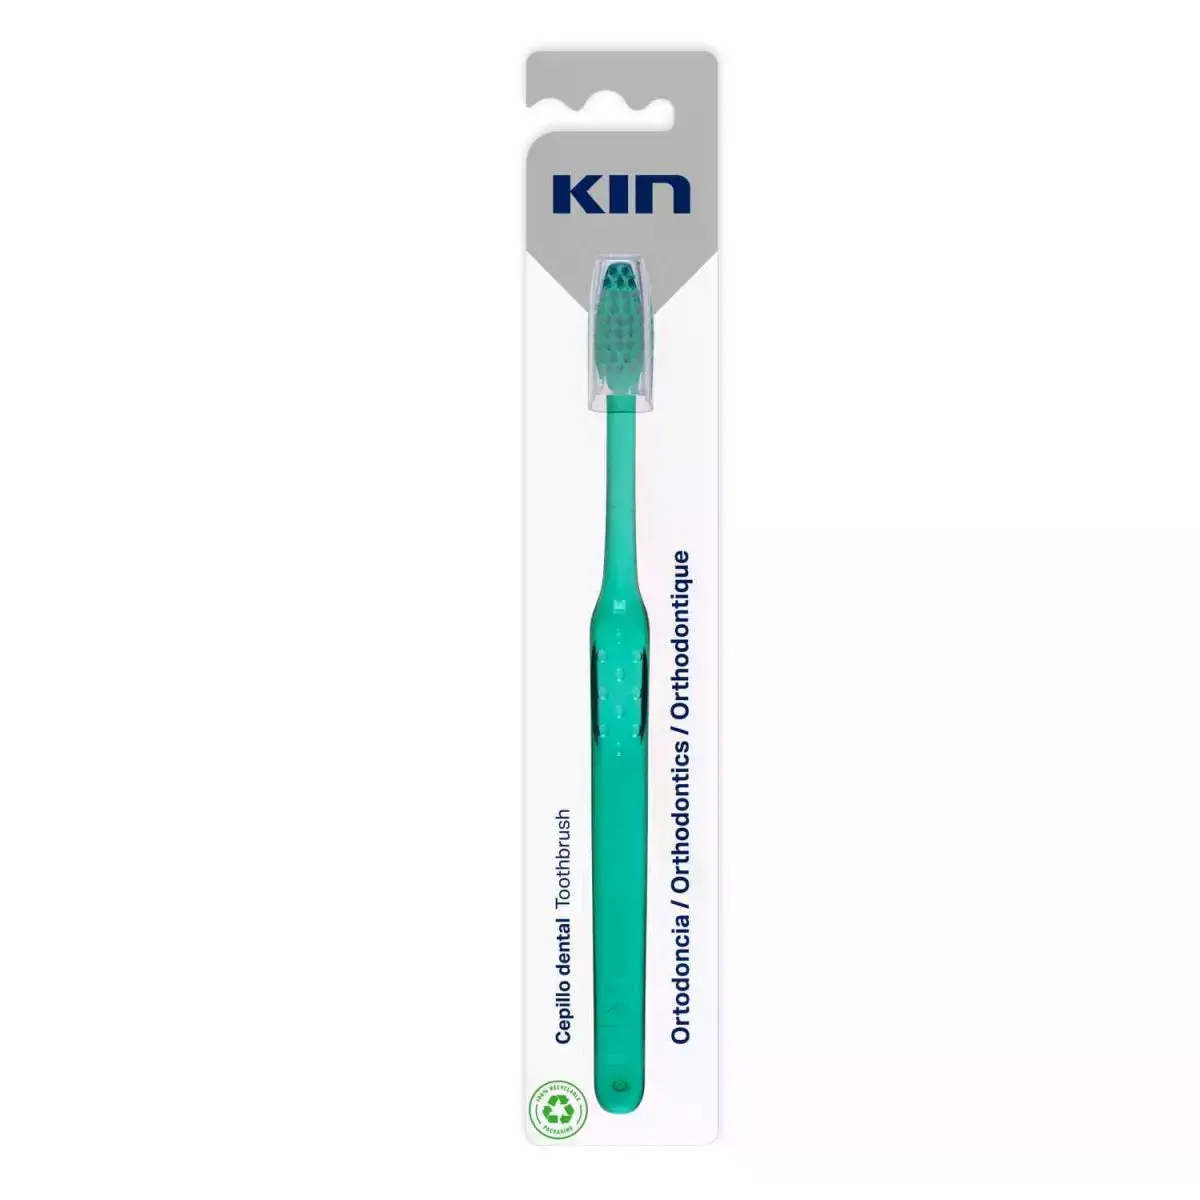 Kin toothbrush orthodontic